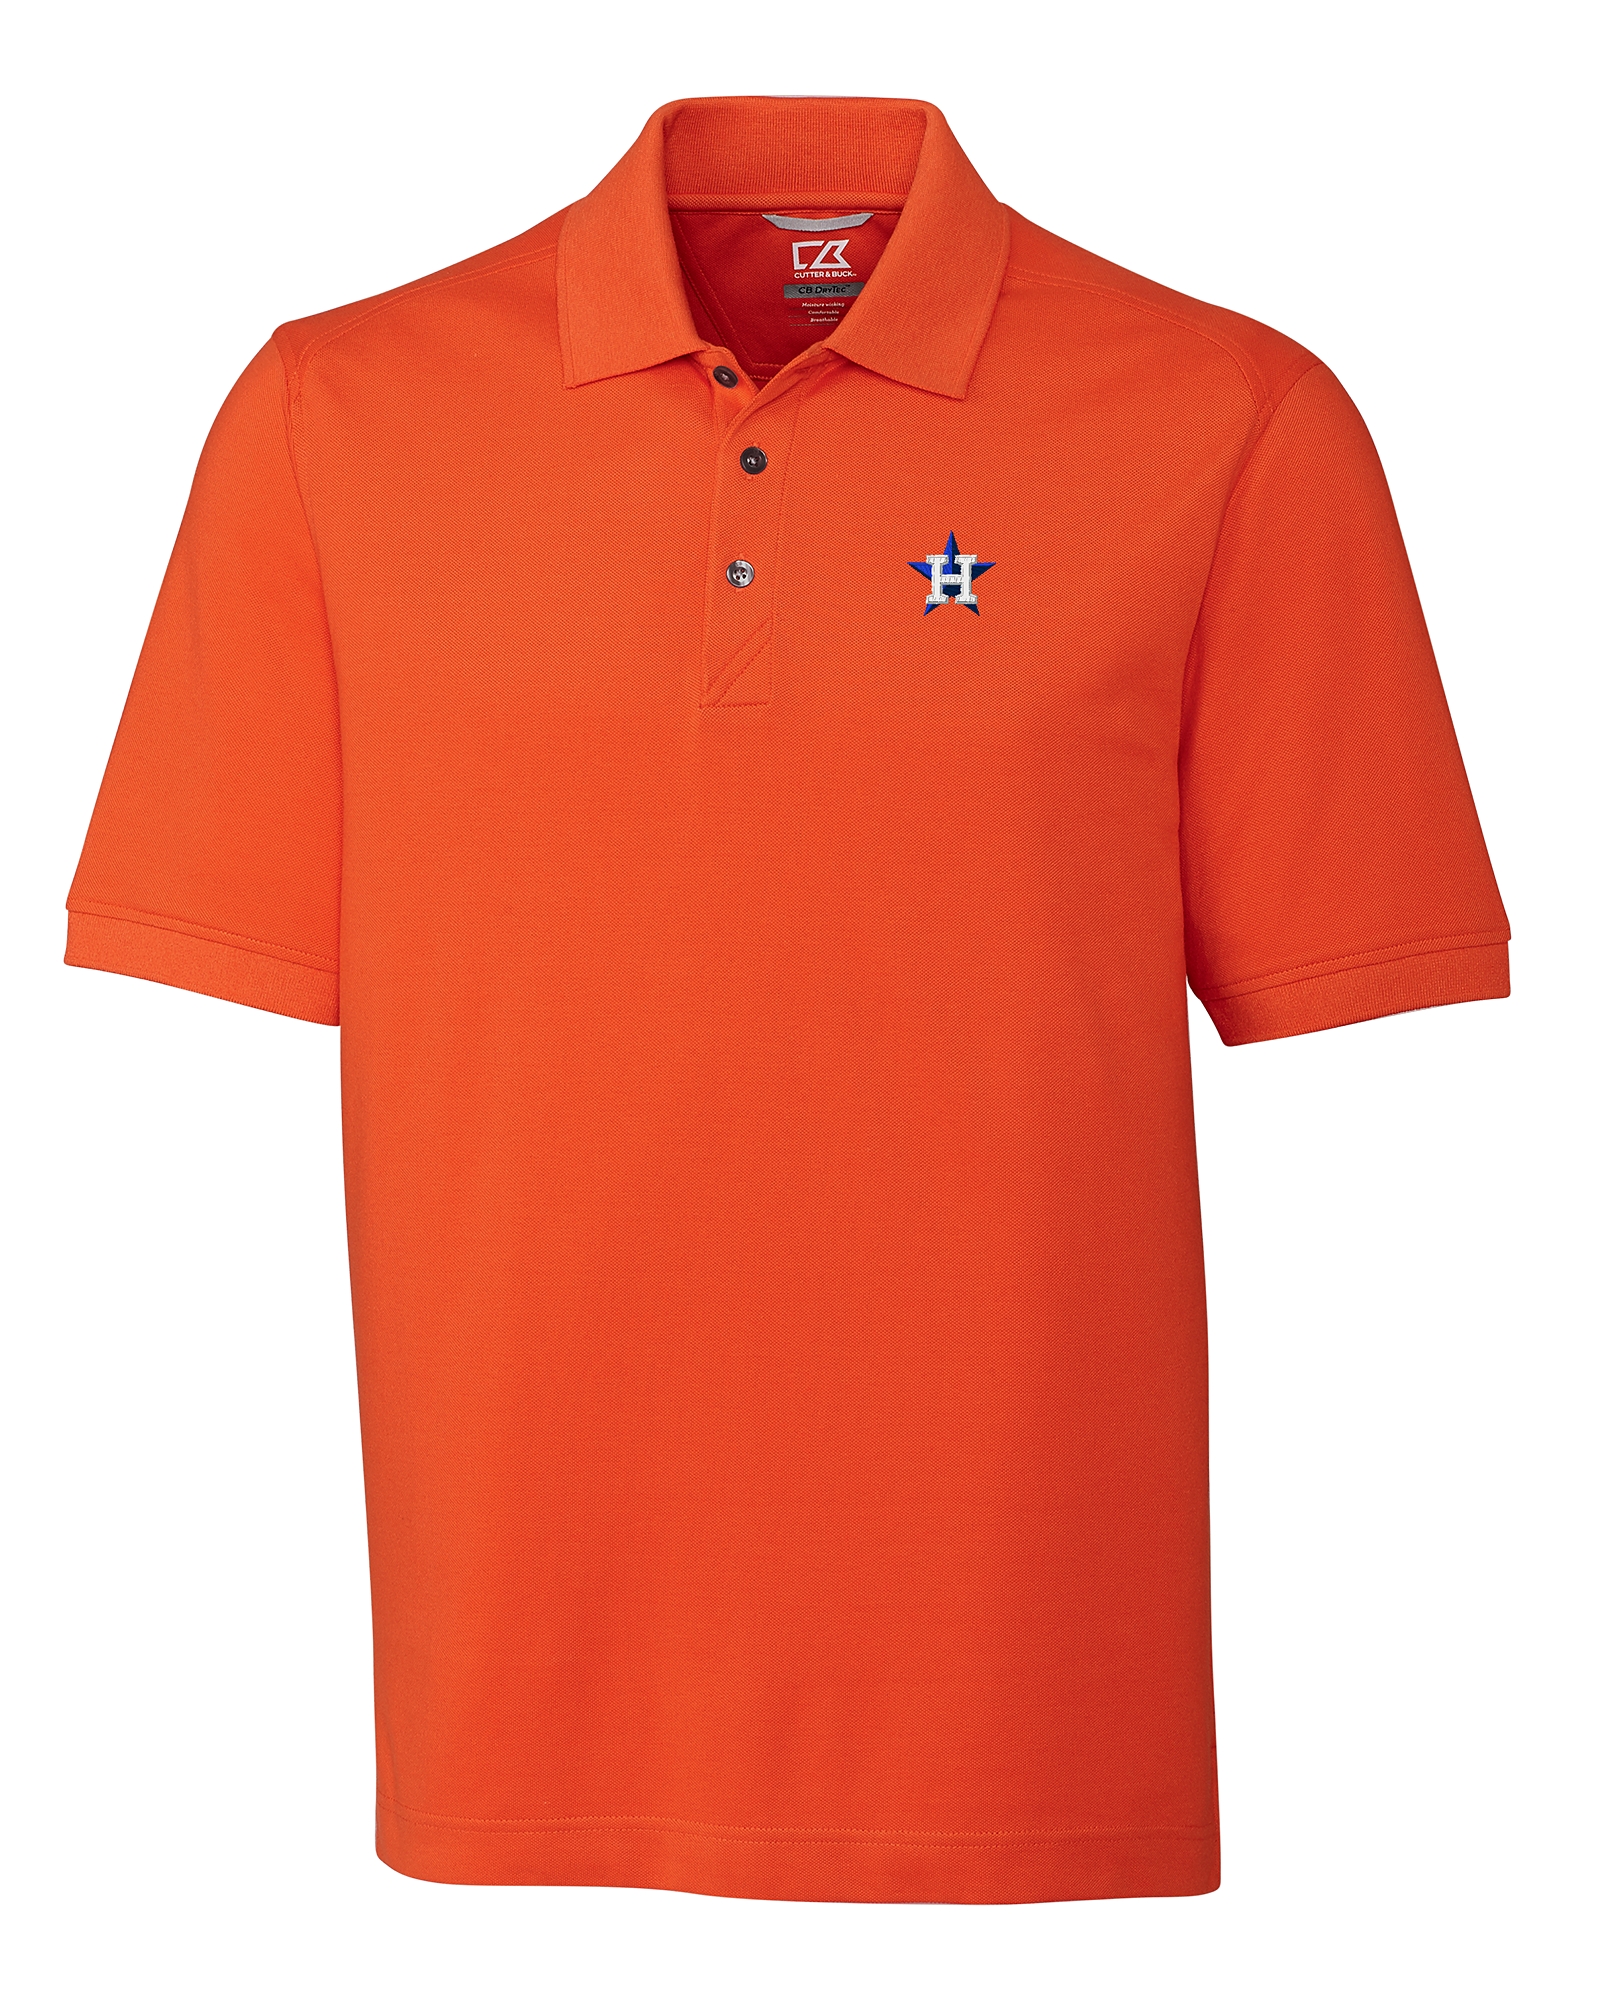 Mens Houston Astros Polos, Golf Shirt, Astros Polo Shirts